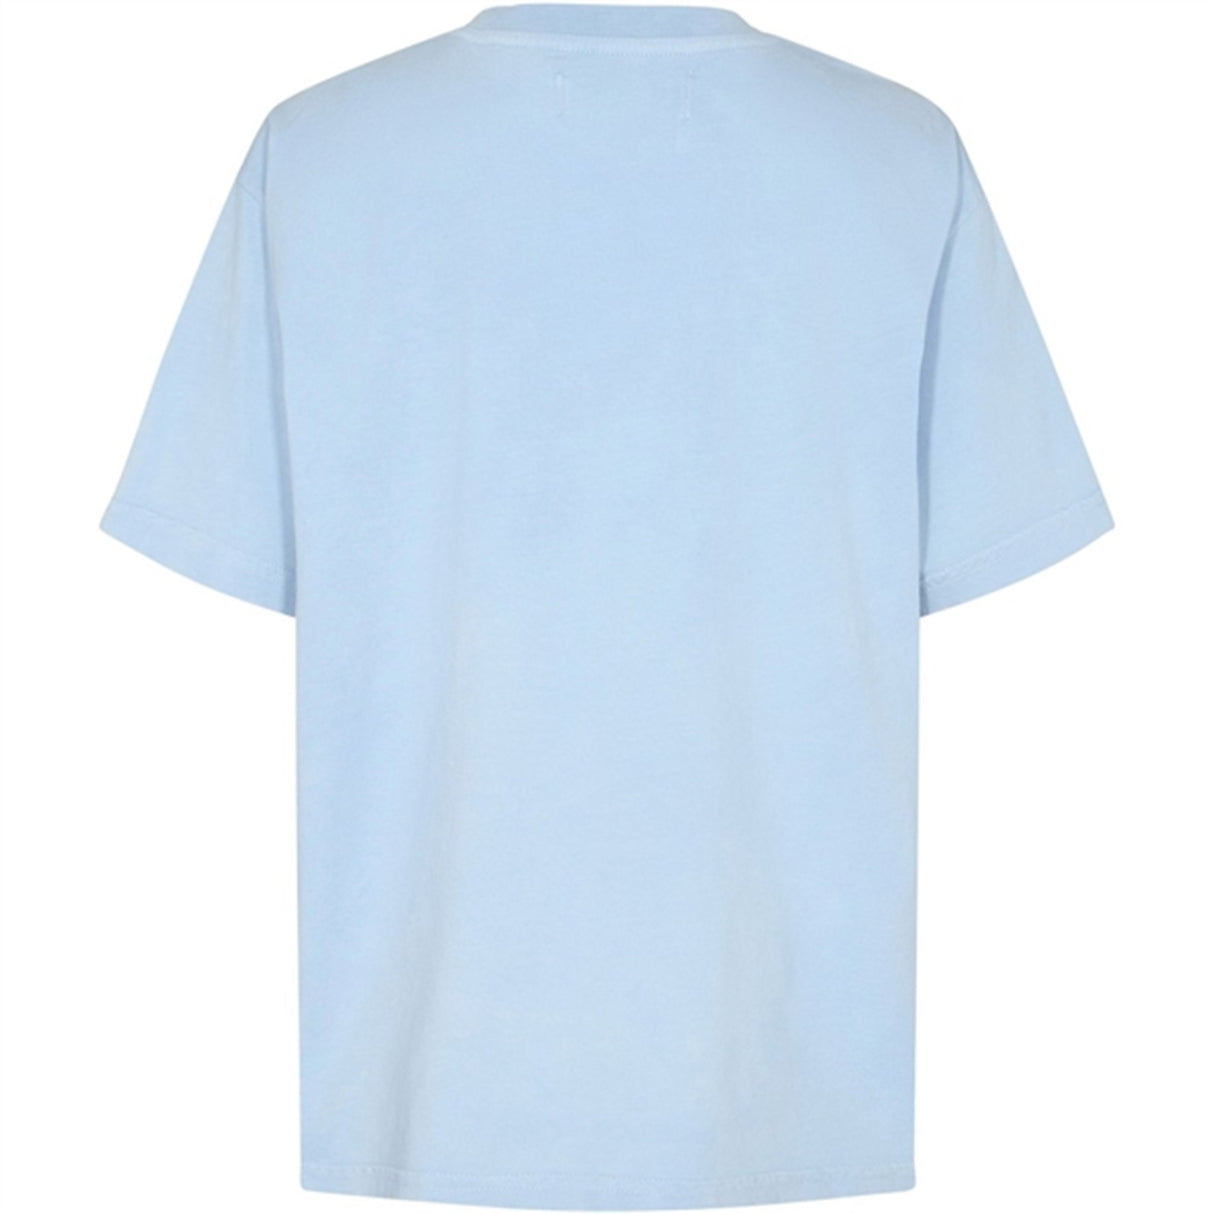 Sofie Schnoor T-Shirt Ice Blue 3